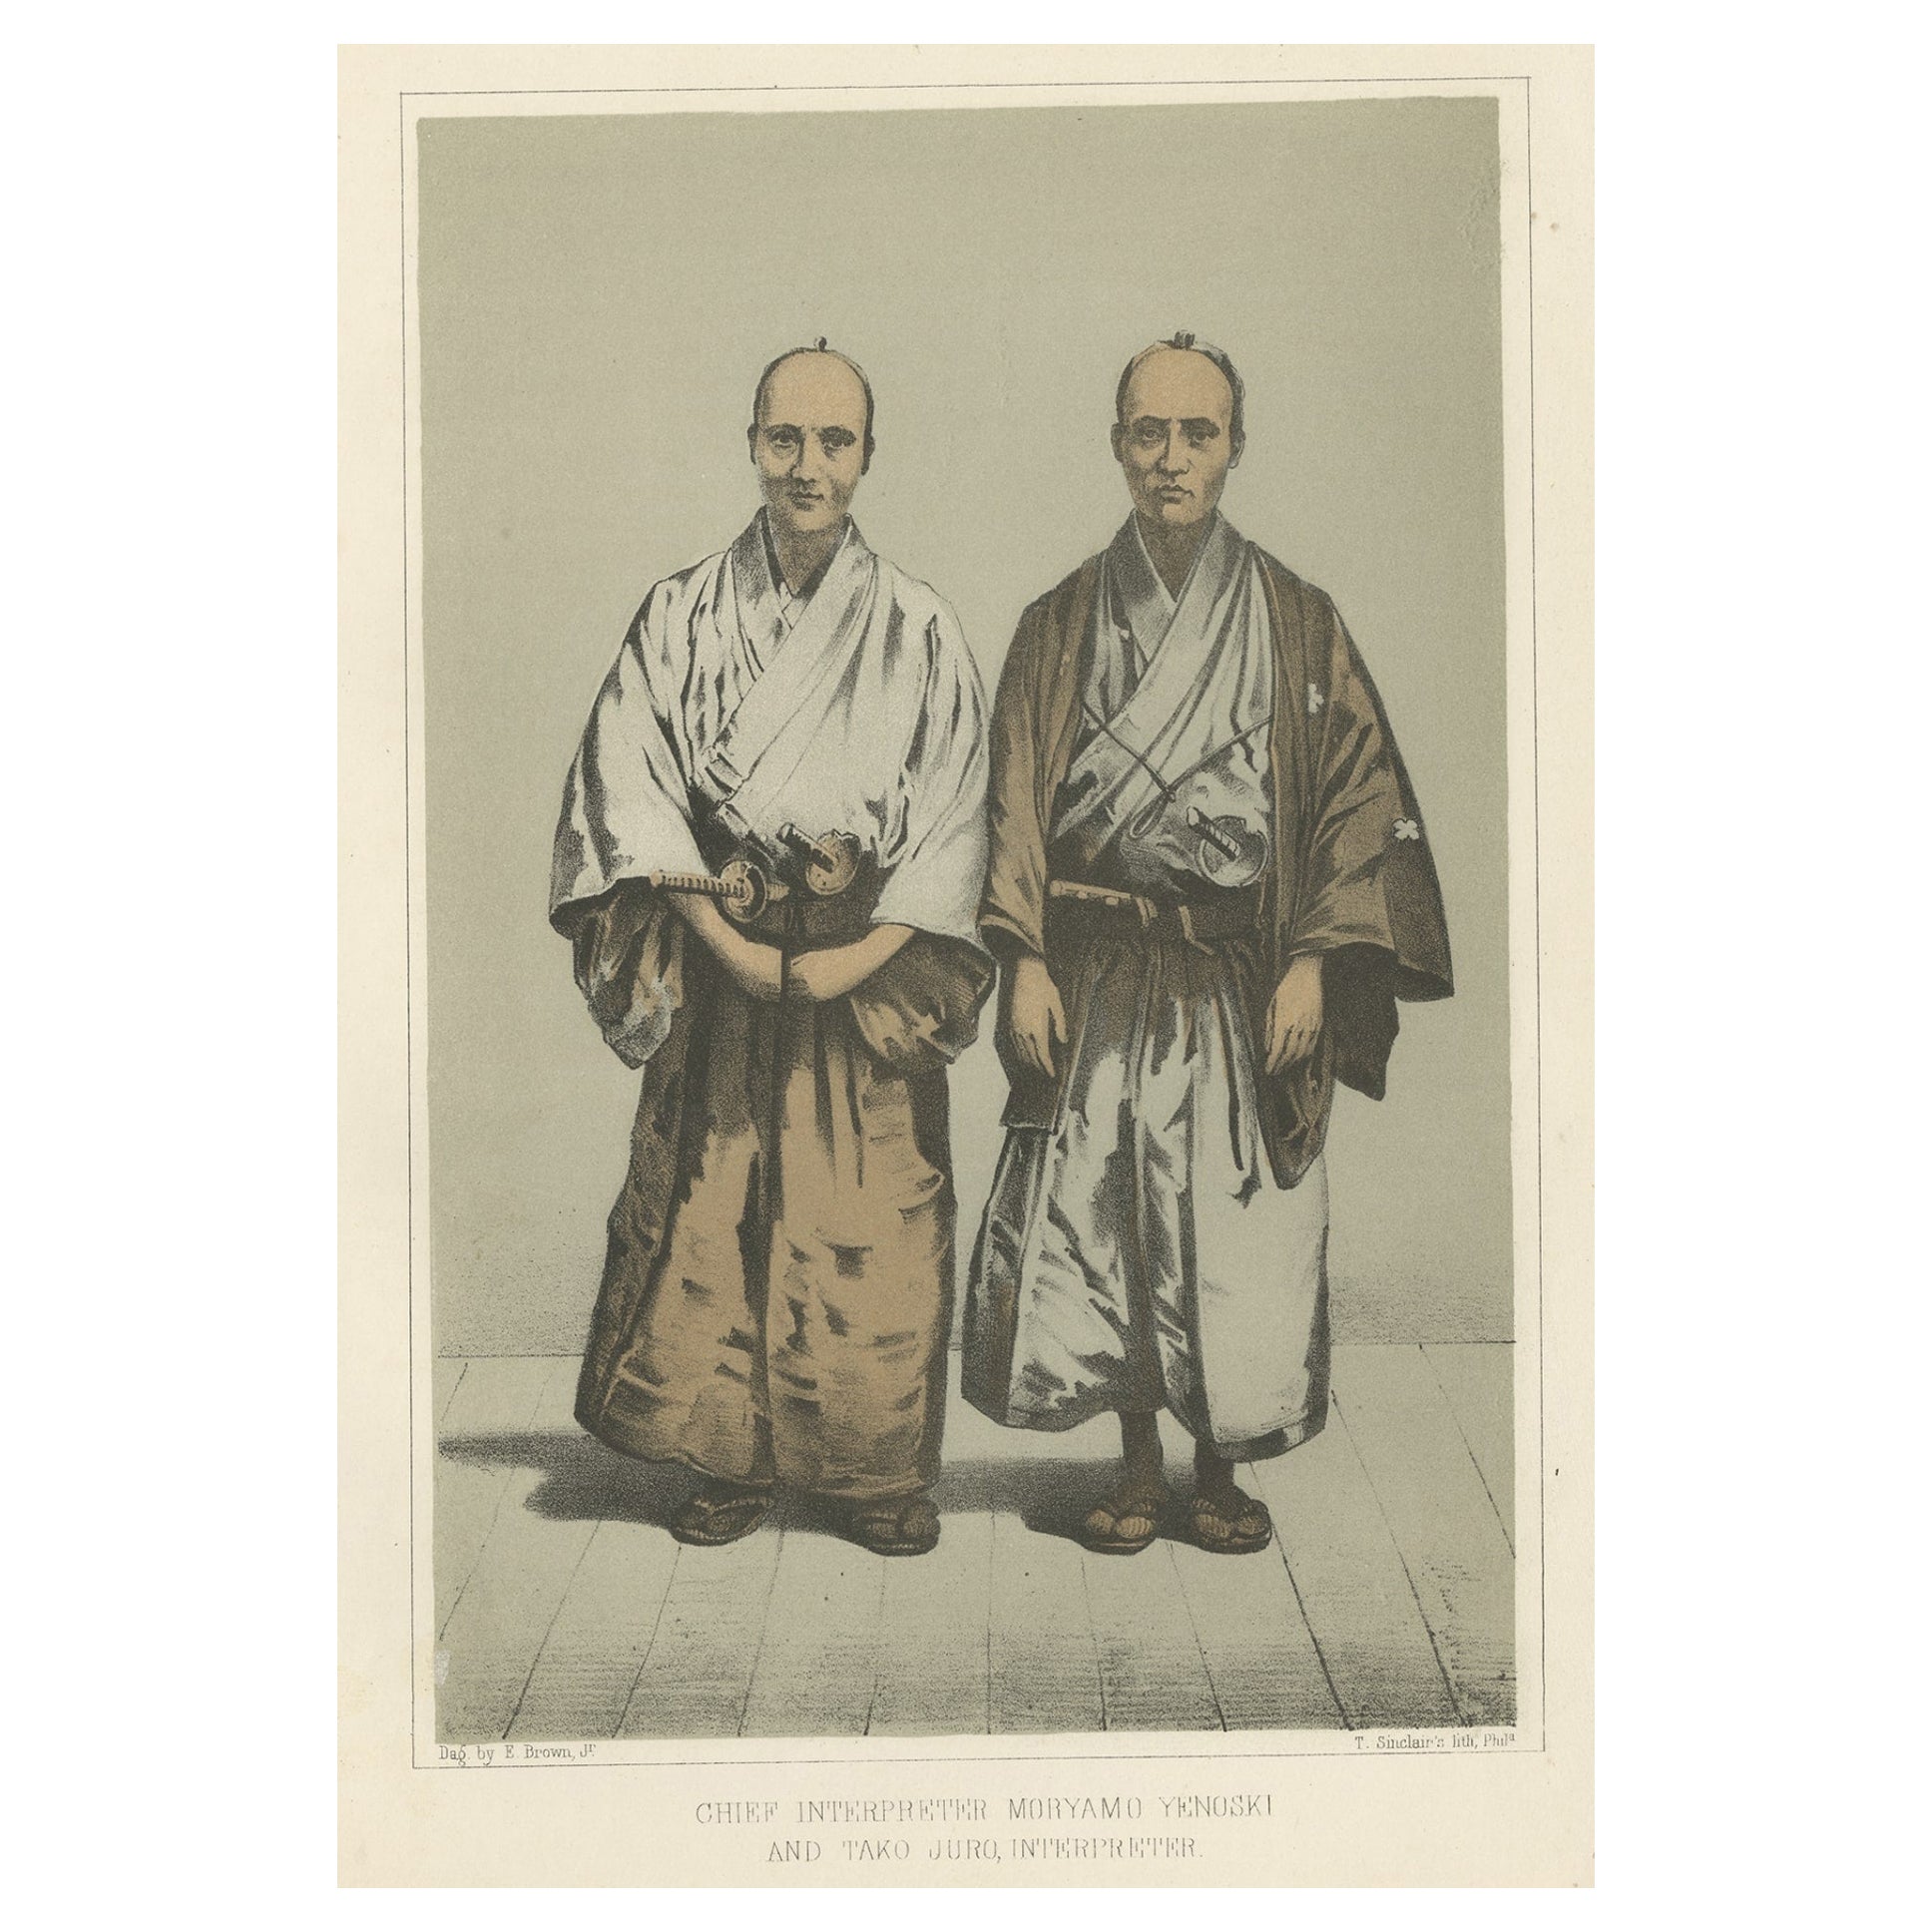 Antiker Druck japanischer Interpreten der Perry-Expedition in Japan, 1856